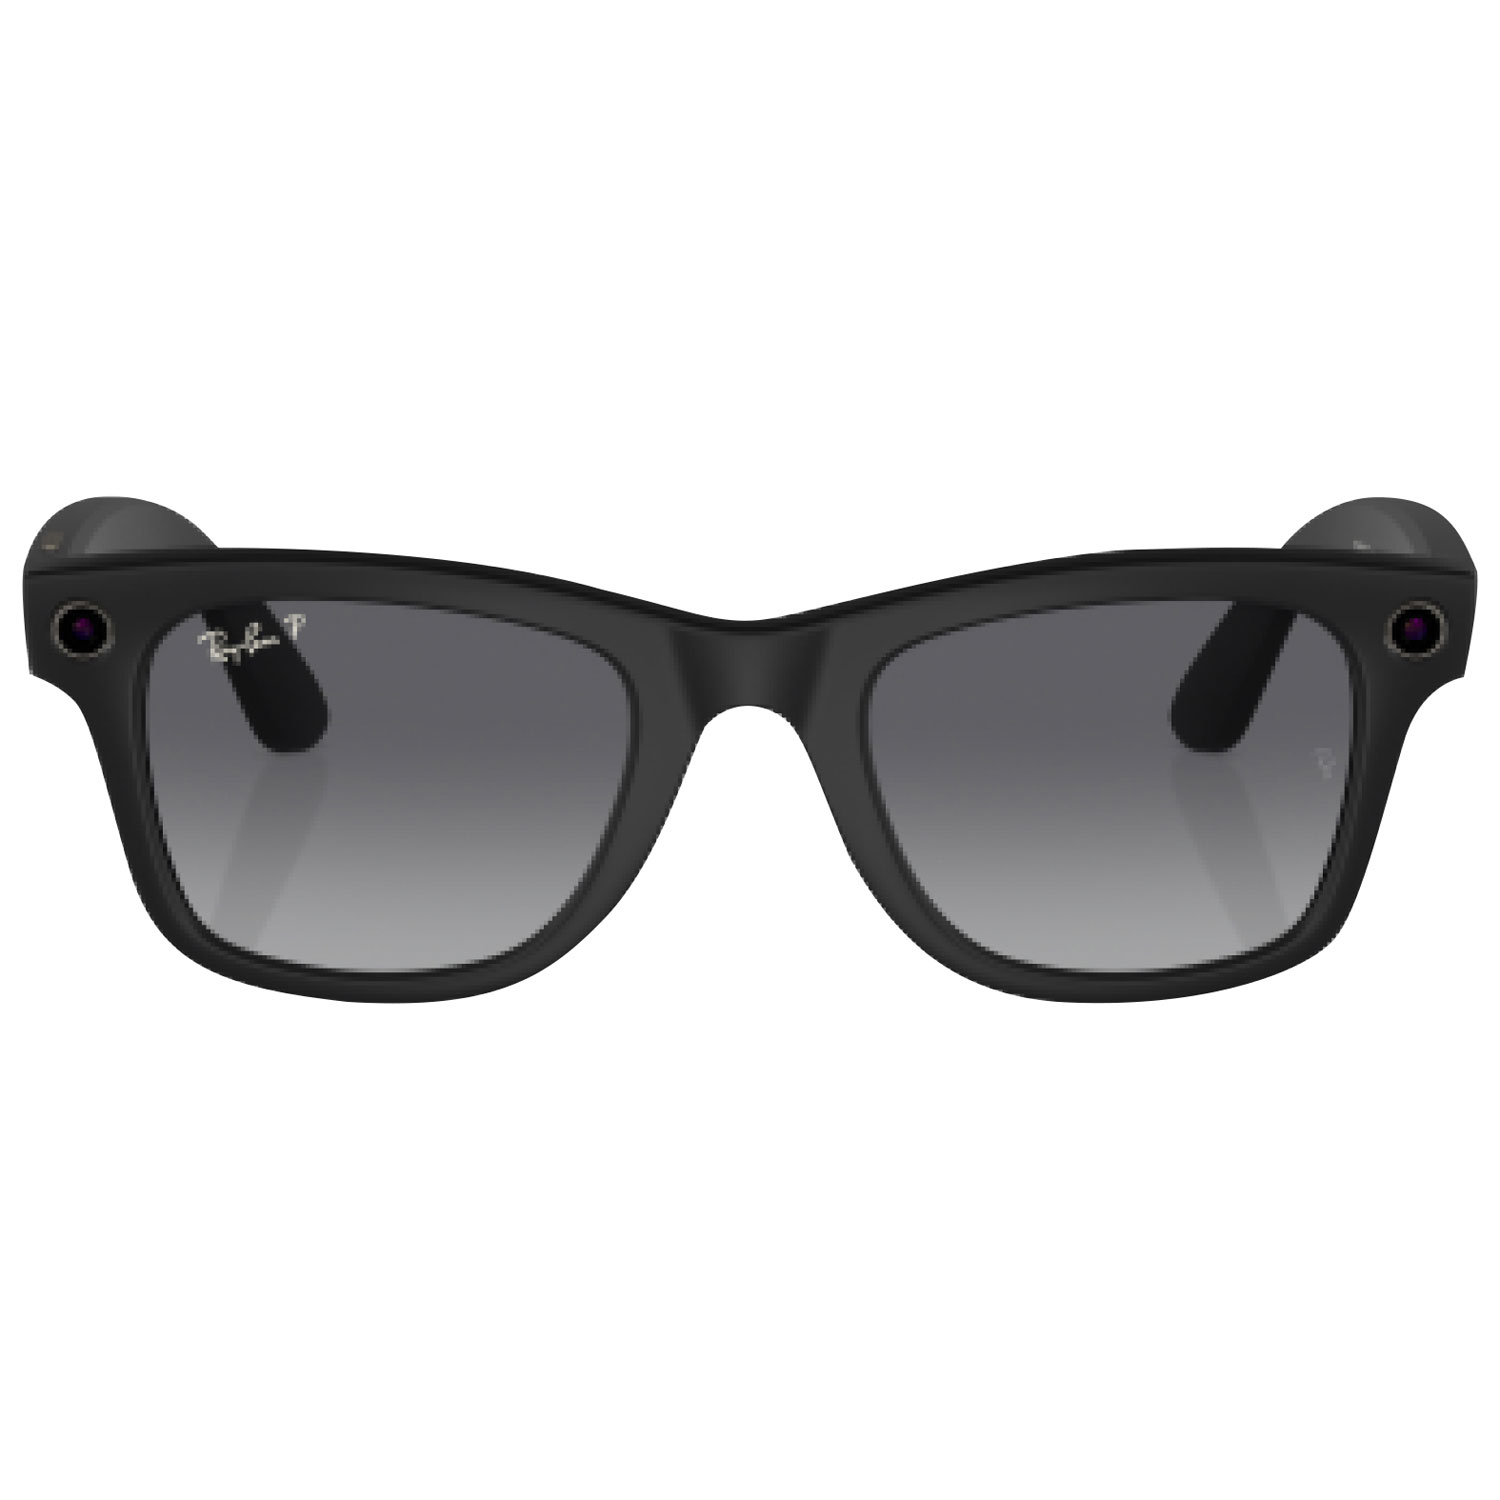 Ray-Ban | Meta Wayfarer Smart Glasses with AI, Photo, Video, Audio & Messaging - Matte Black/Polarized Gradient Graphite